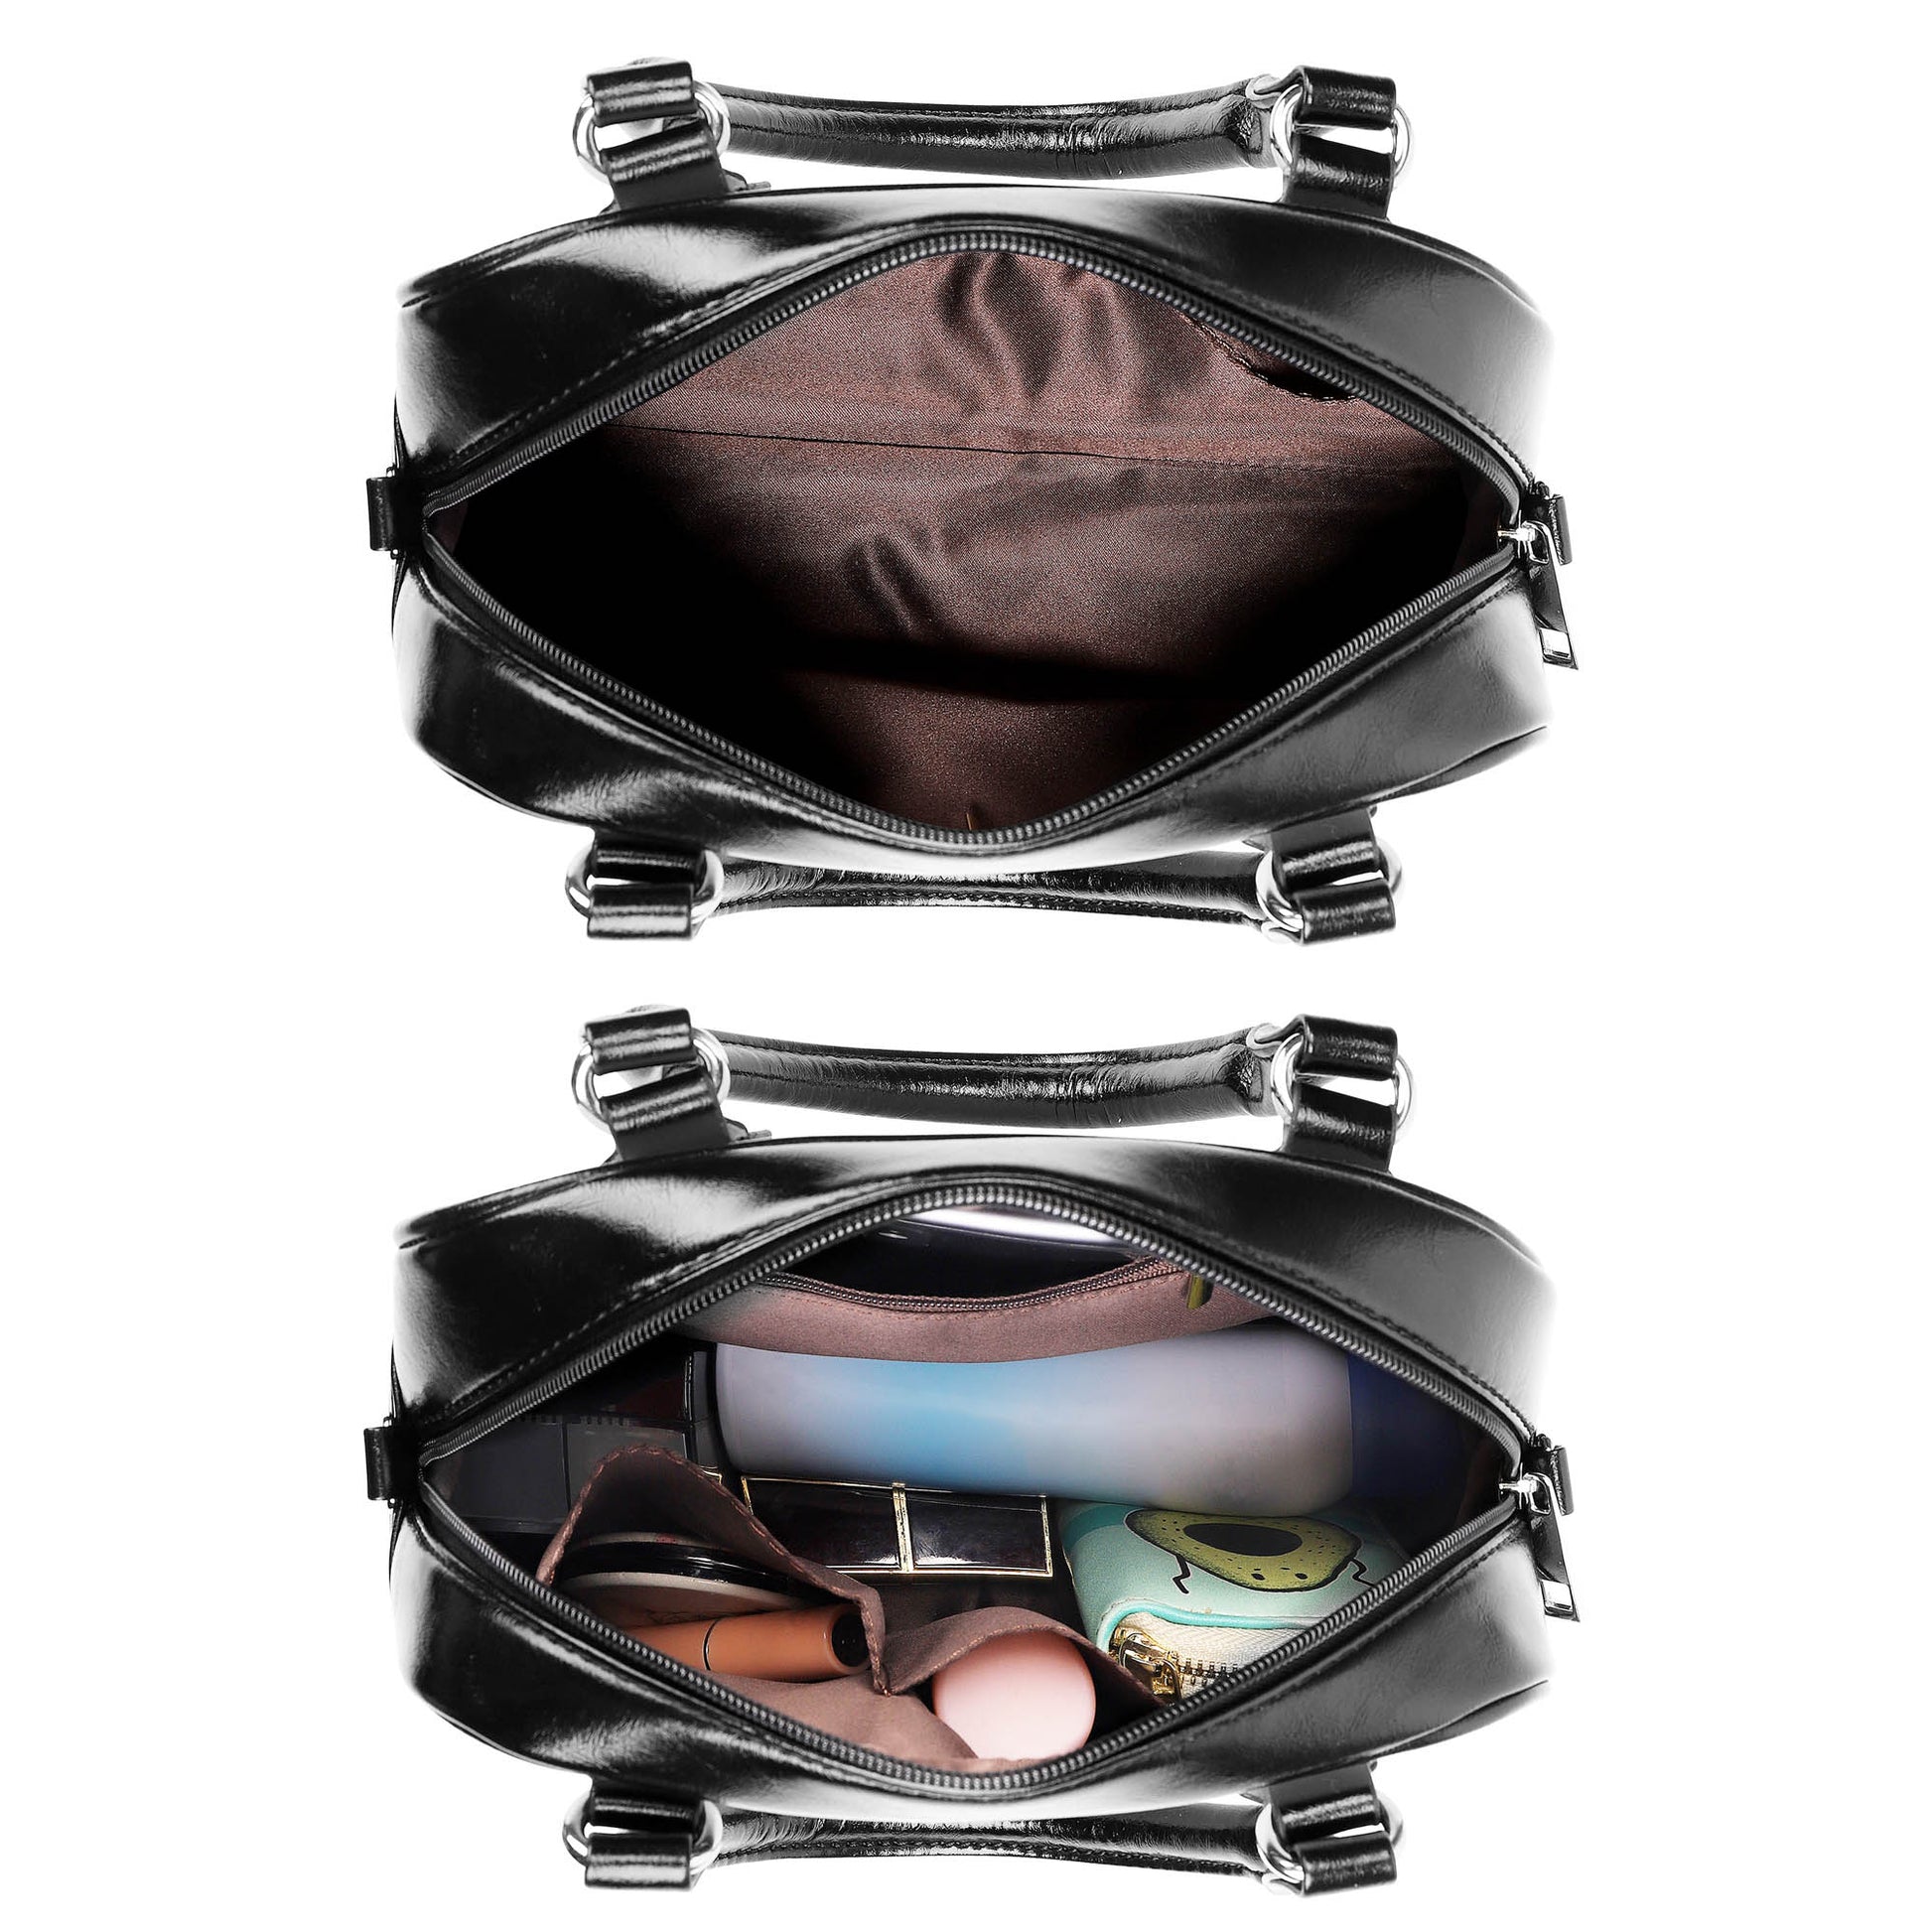 MacBain Tartan Shoulder Handbags with Family Crest - Tartanvibesclothing